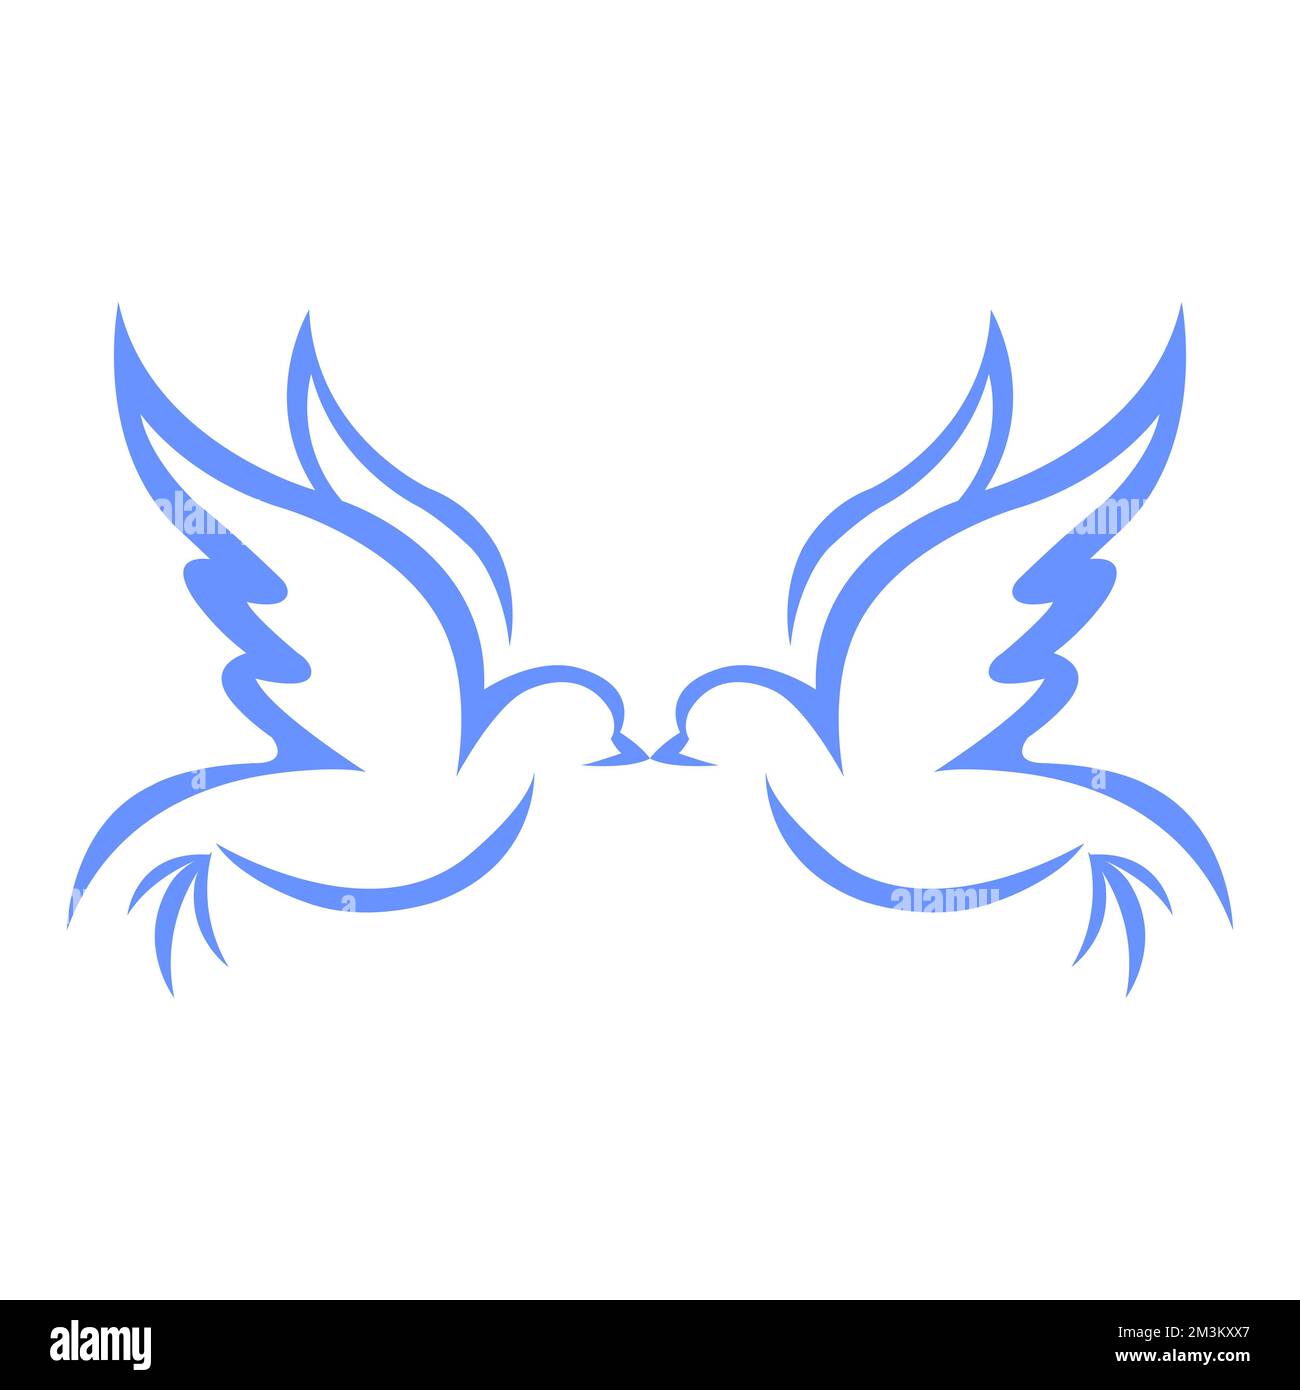 Modello con logo Bird con stile art. Creative abstract Bird logo collection.EPS 10 Illustrazione Vettoriale